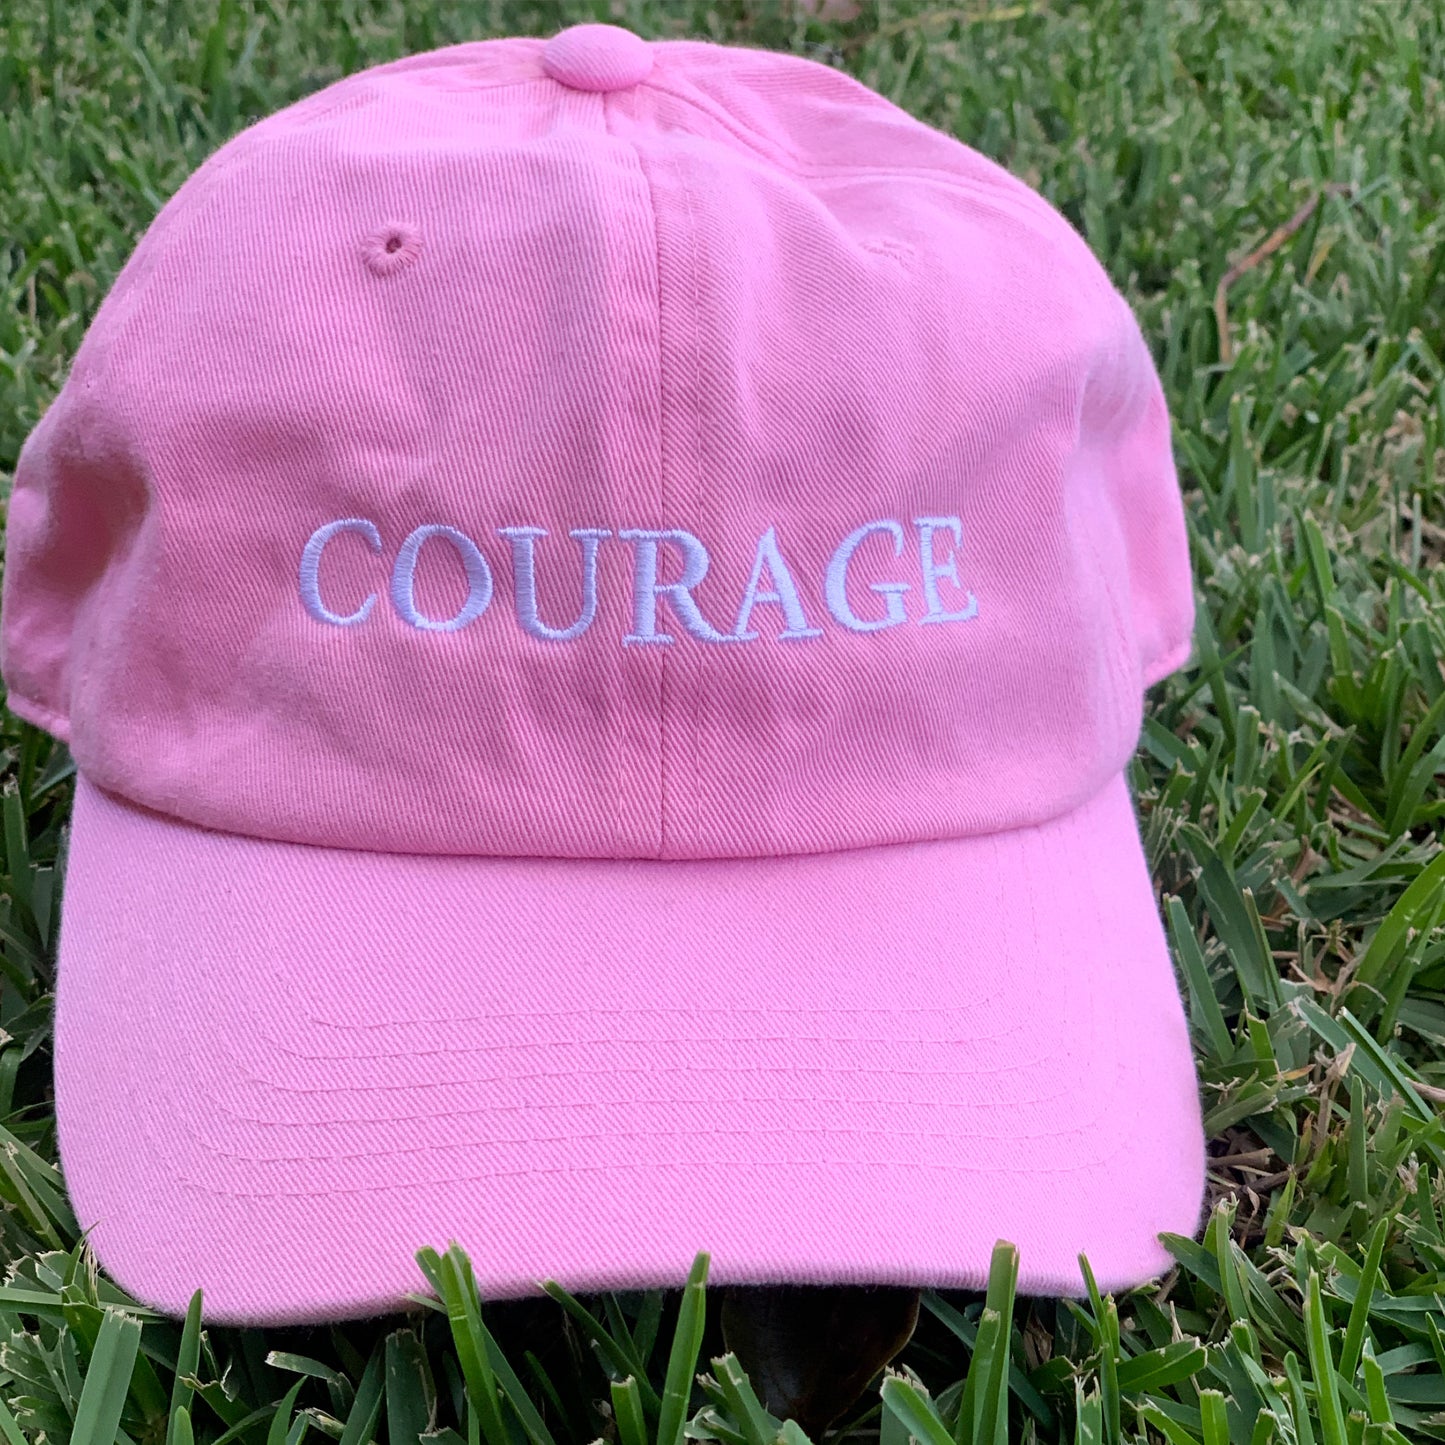 Courage Dad Hat